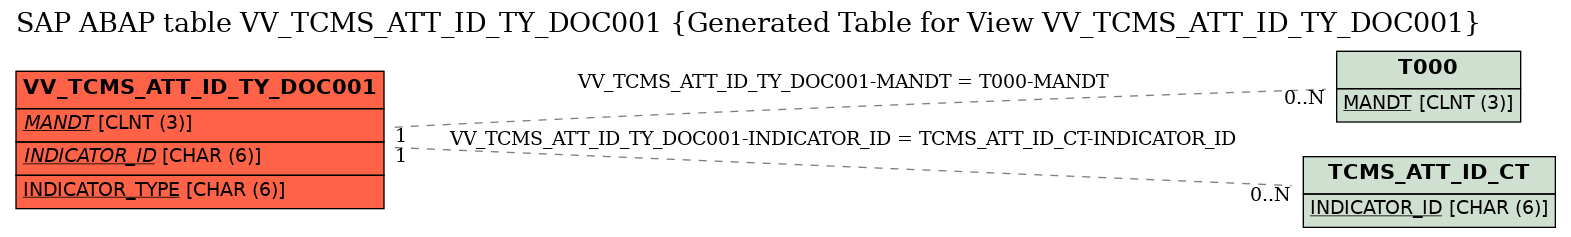 E-R Diagram for table VV_TCMS_ATT_ID_TY_DOC001 (Generated Table for View VV_TCMS_ATT_ID_TY_DOC001)